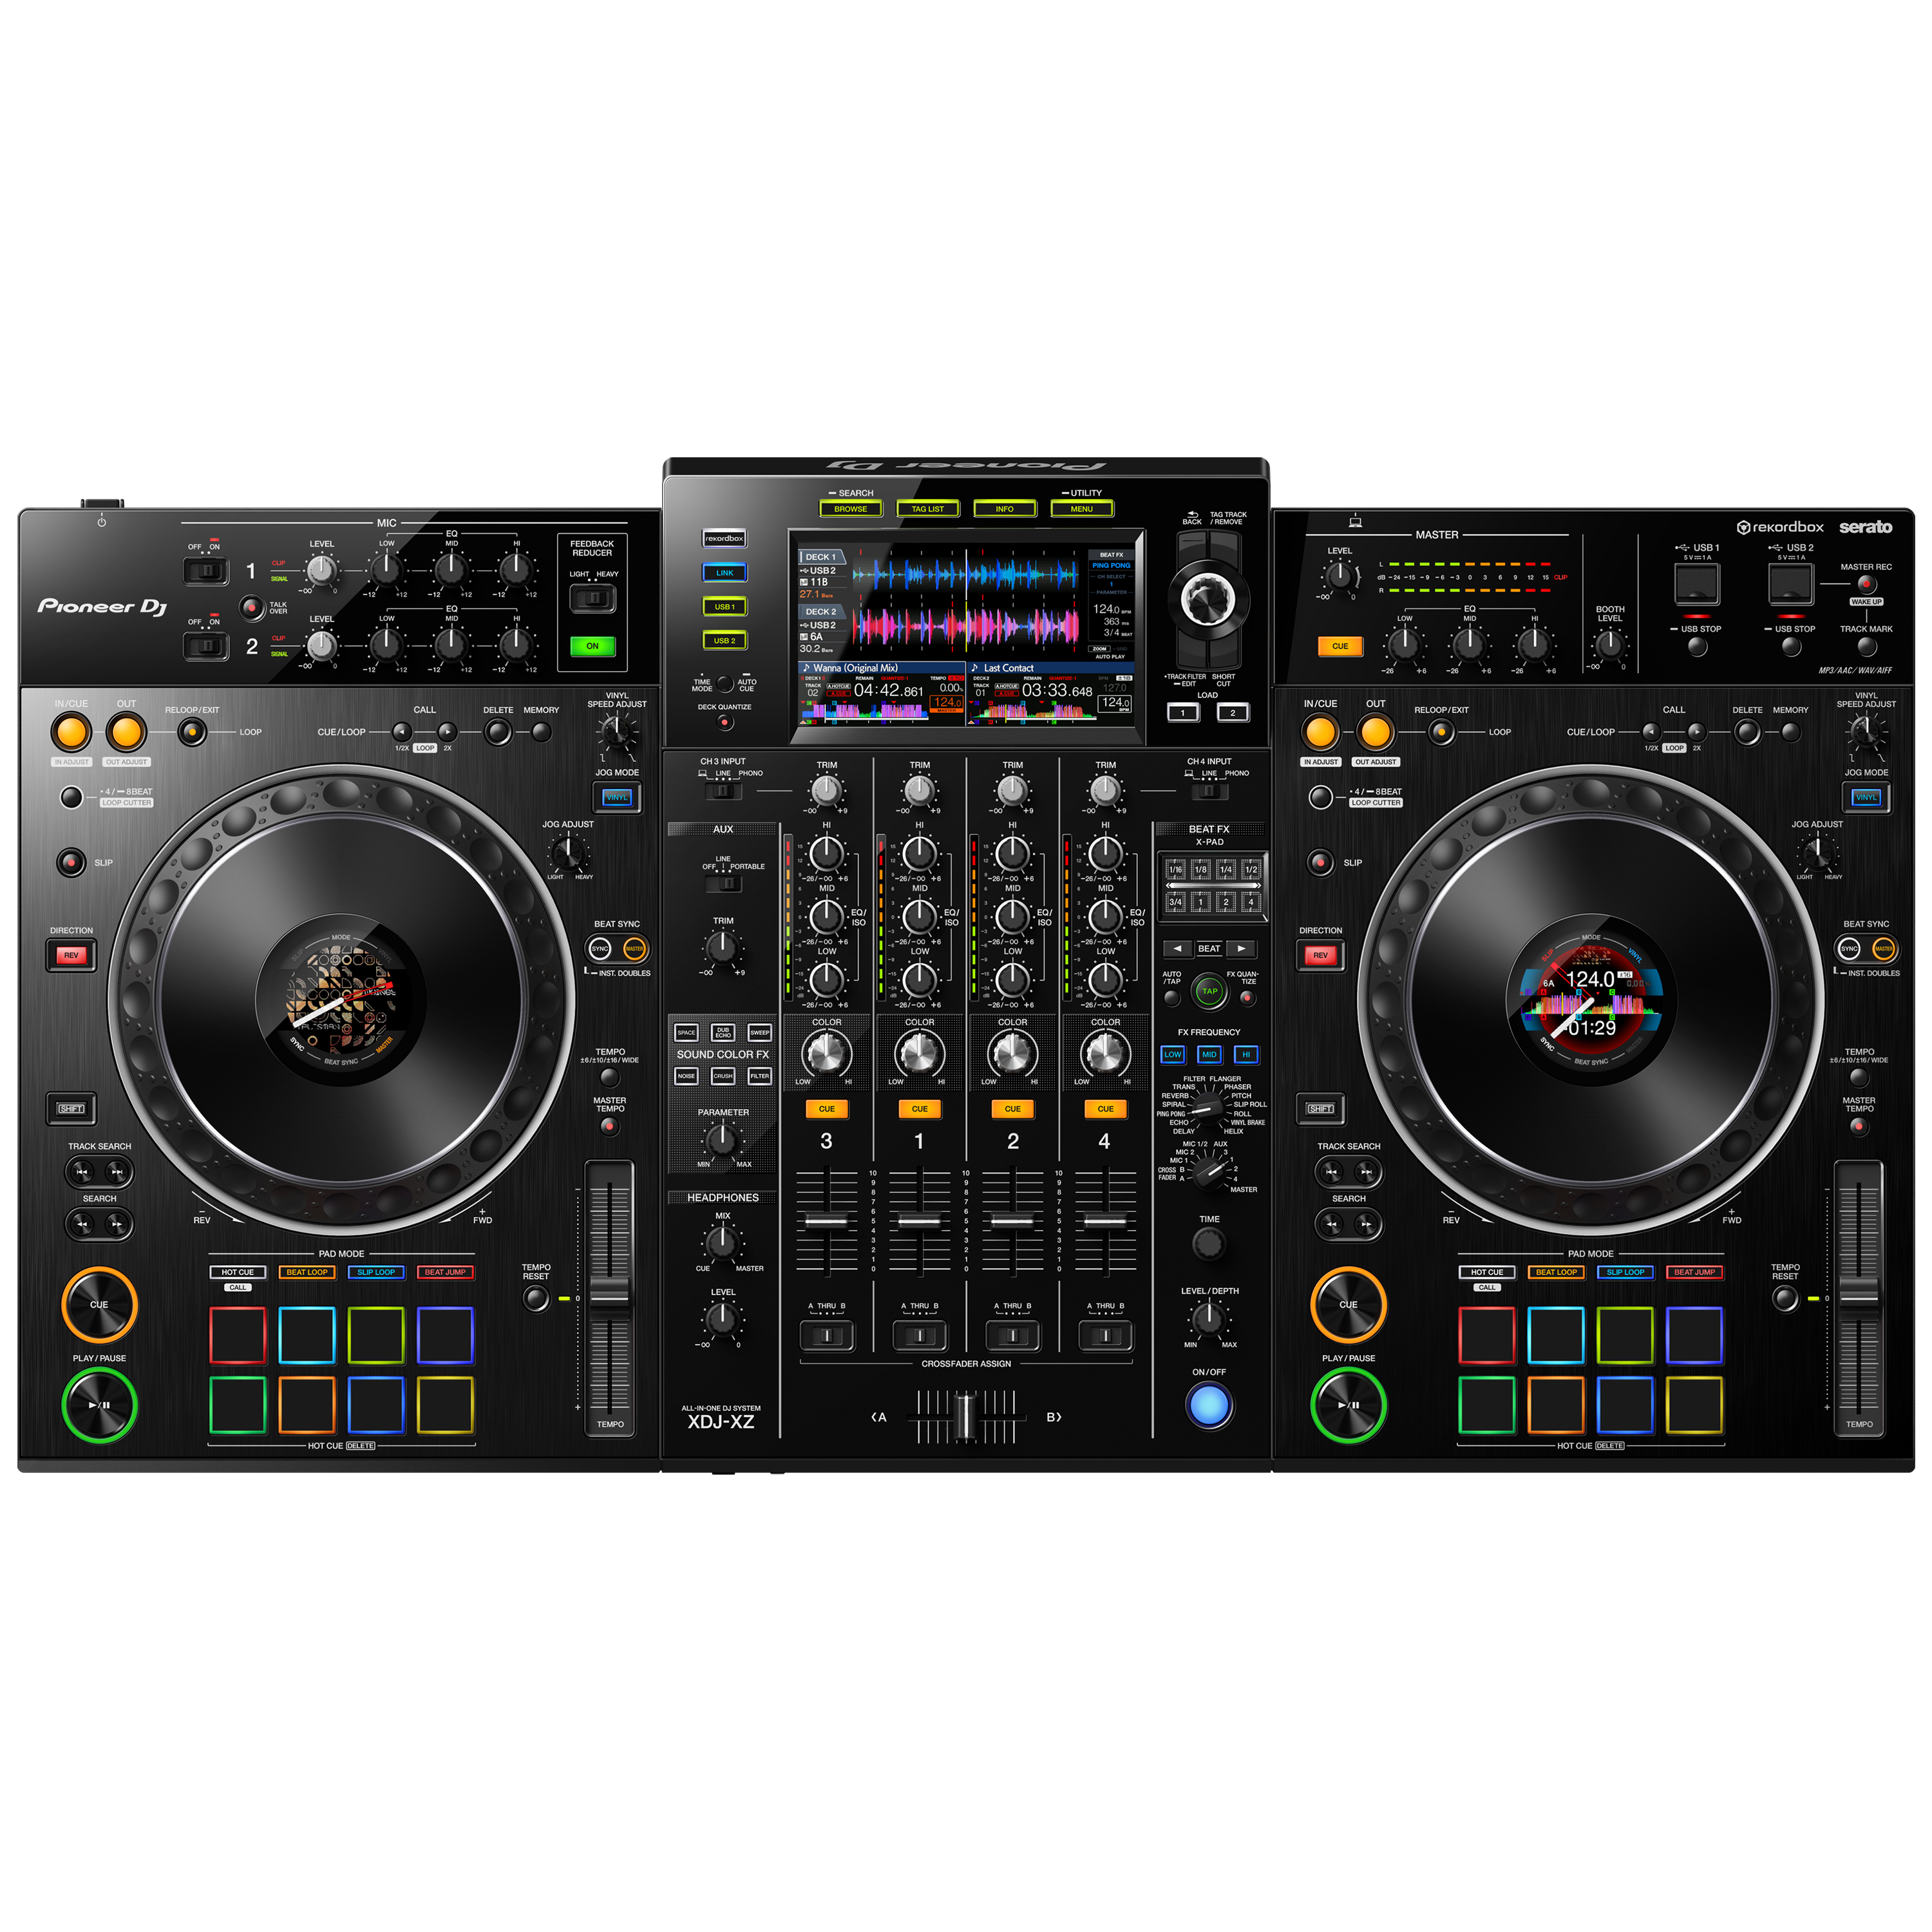 DJセットC (XDJ-XZ) | ネクサスミュージック - 全国配送DJ機材レンタル